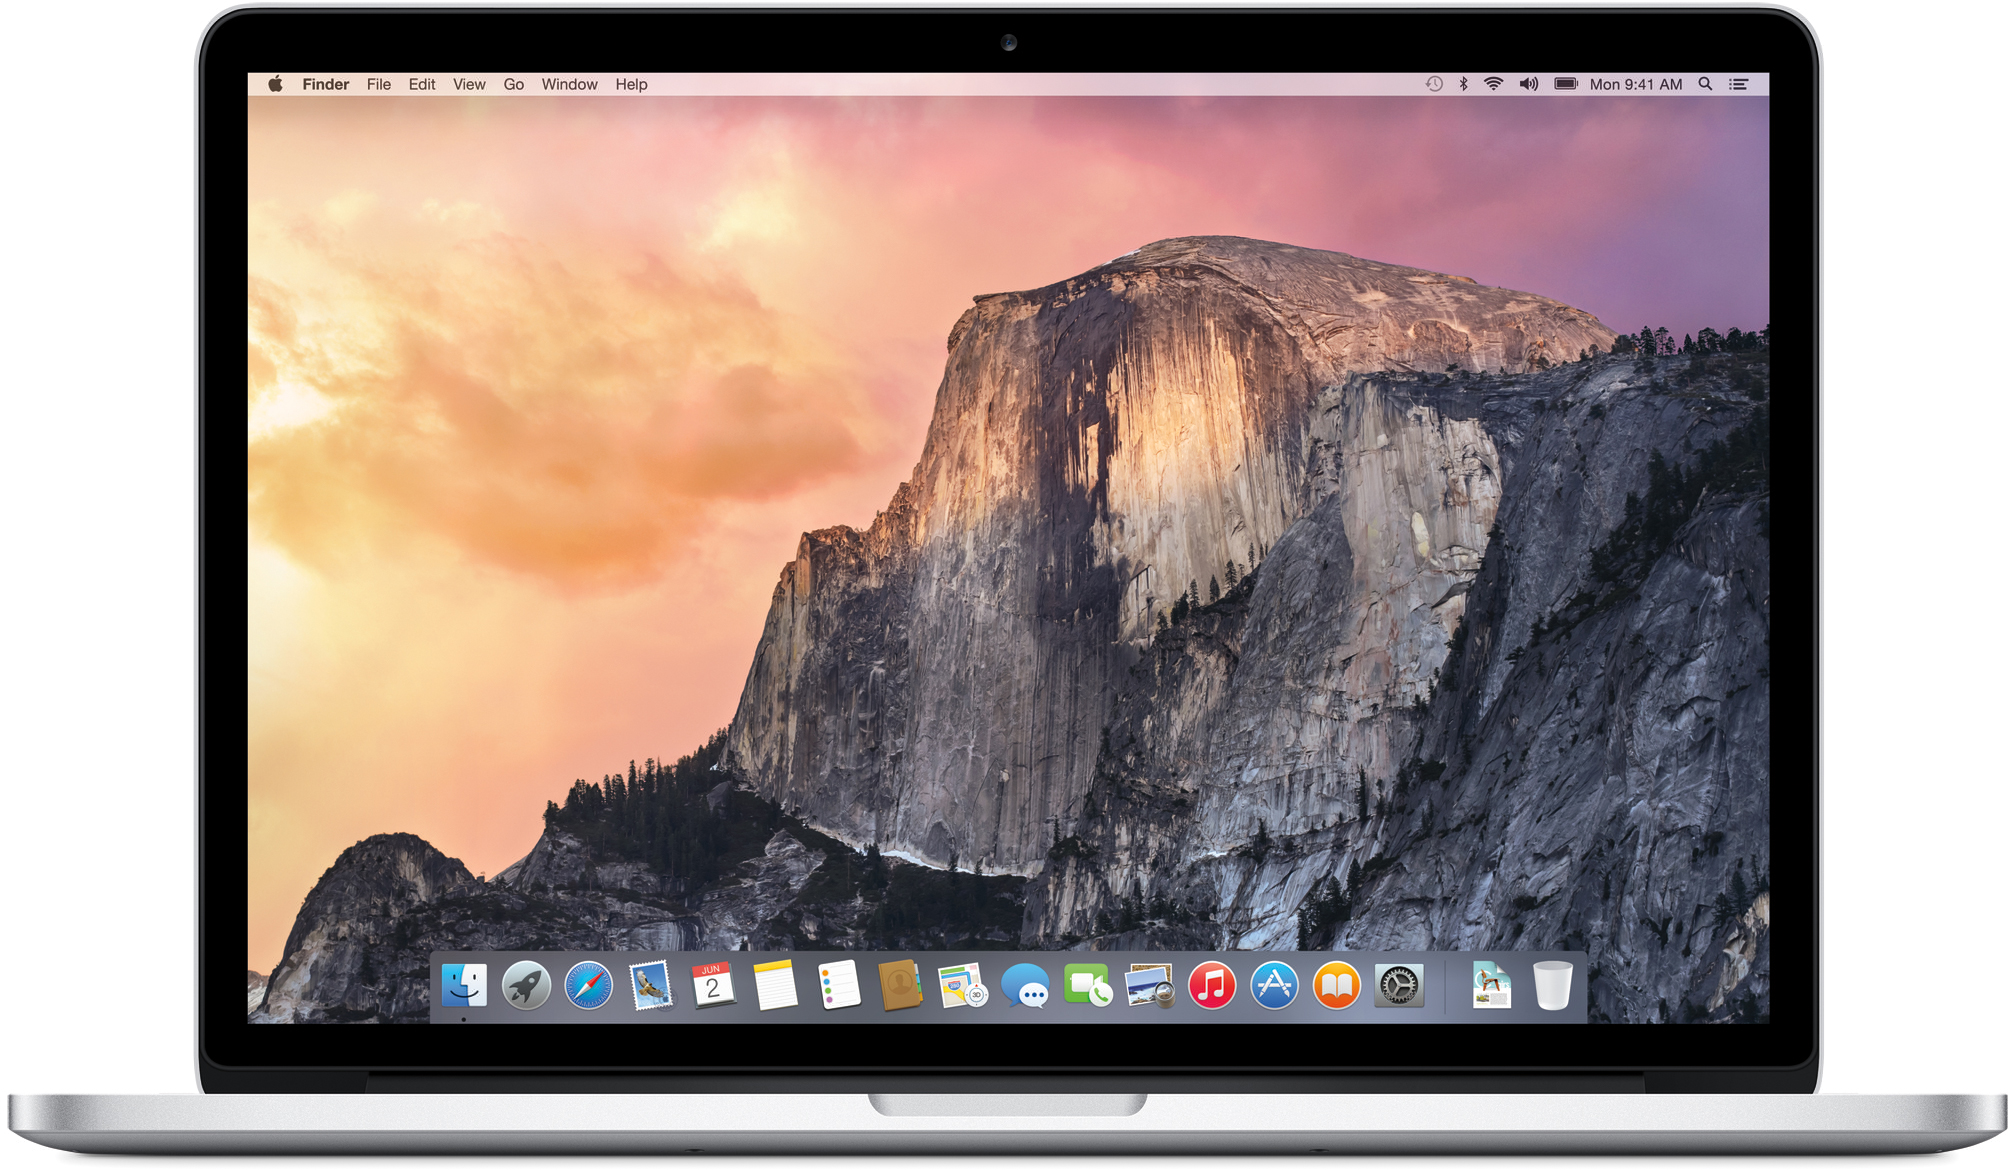 OS X Yosemite running on MacBook Pro